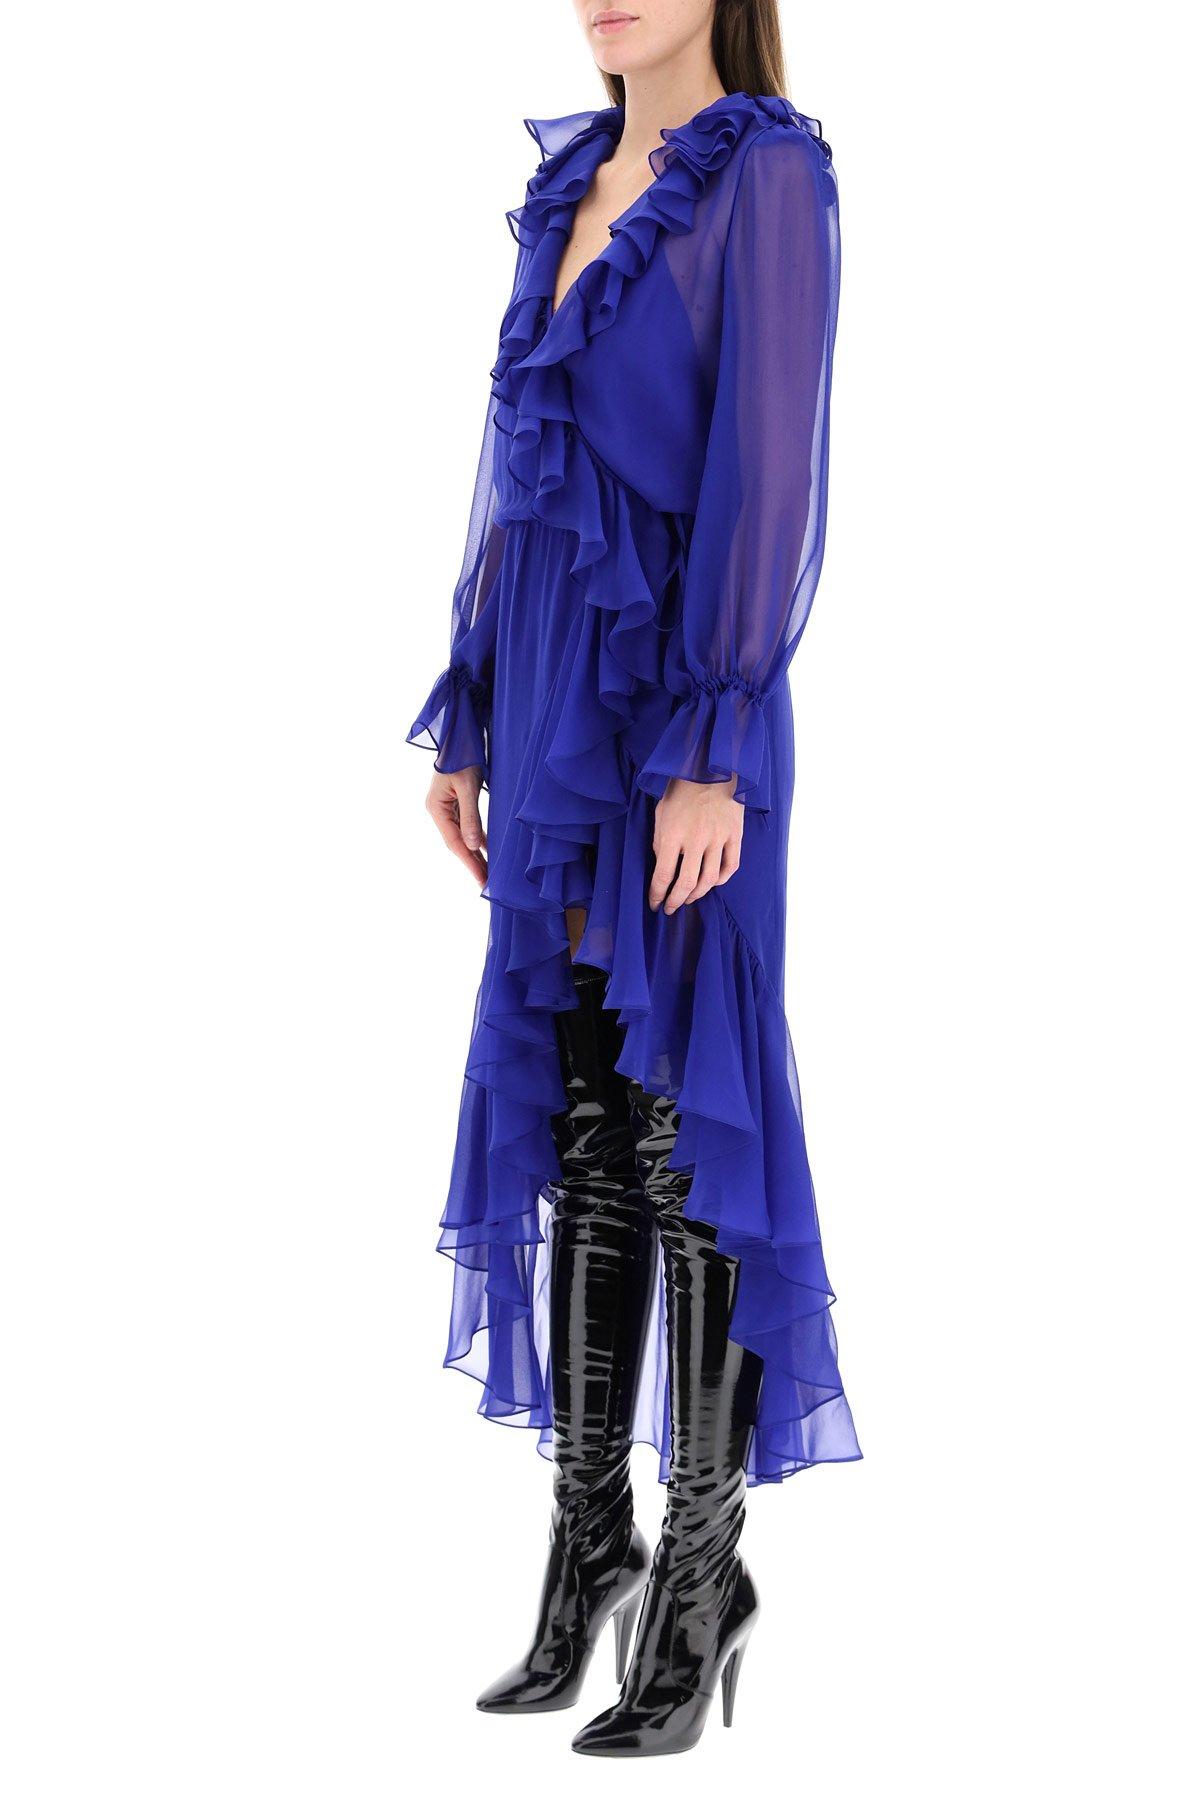 Saint Laurent Chiffon Dress With Ruffles in Blue | Lyst